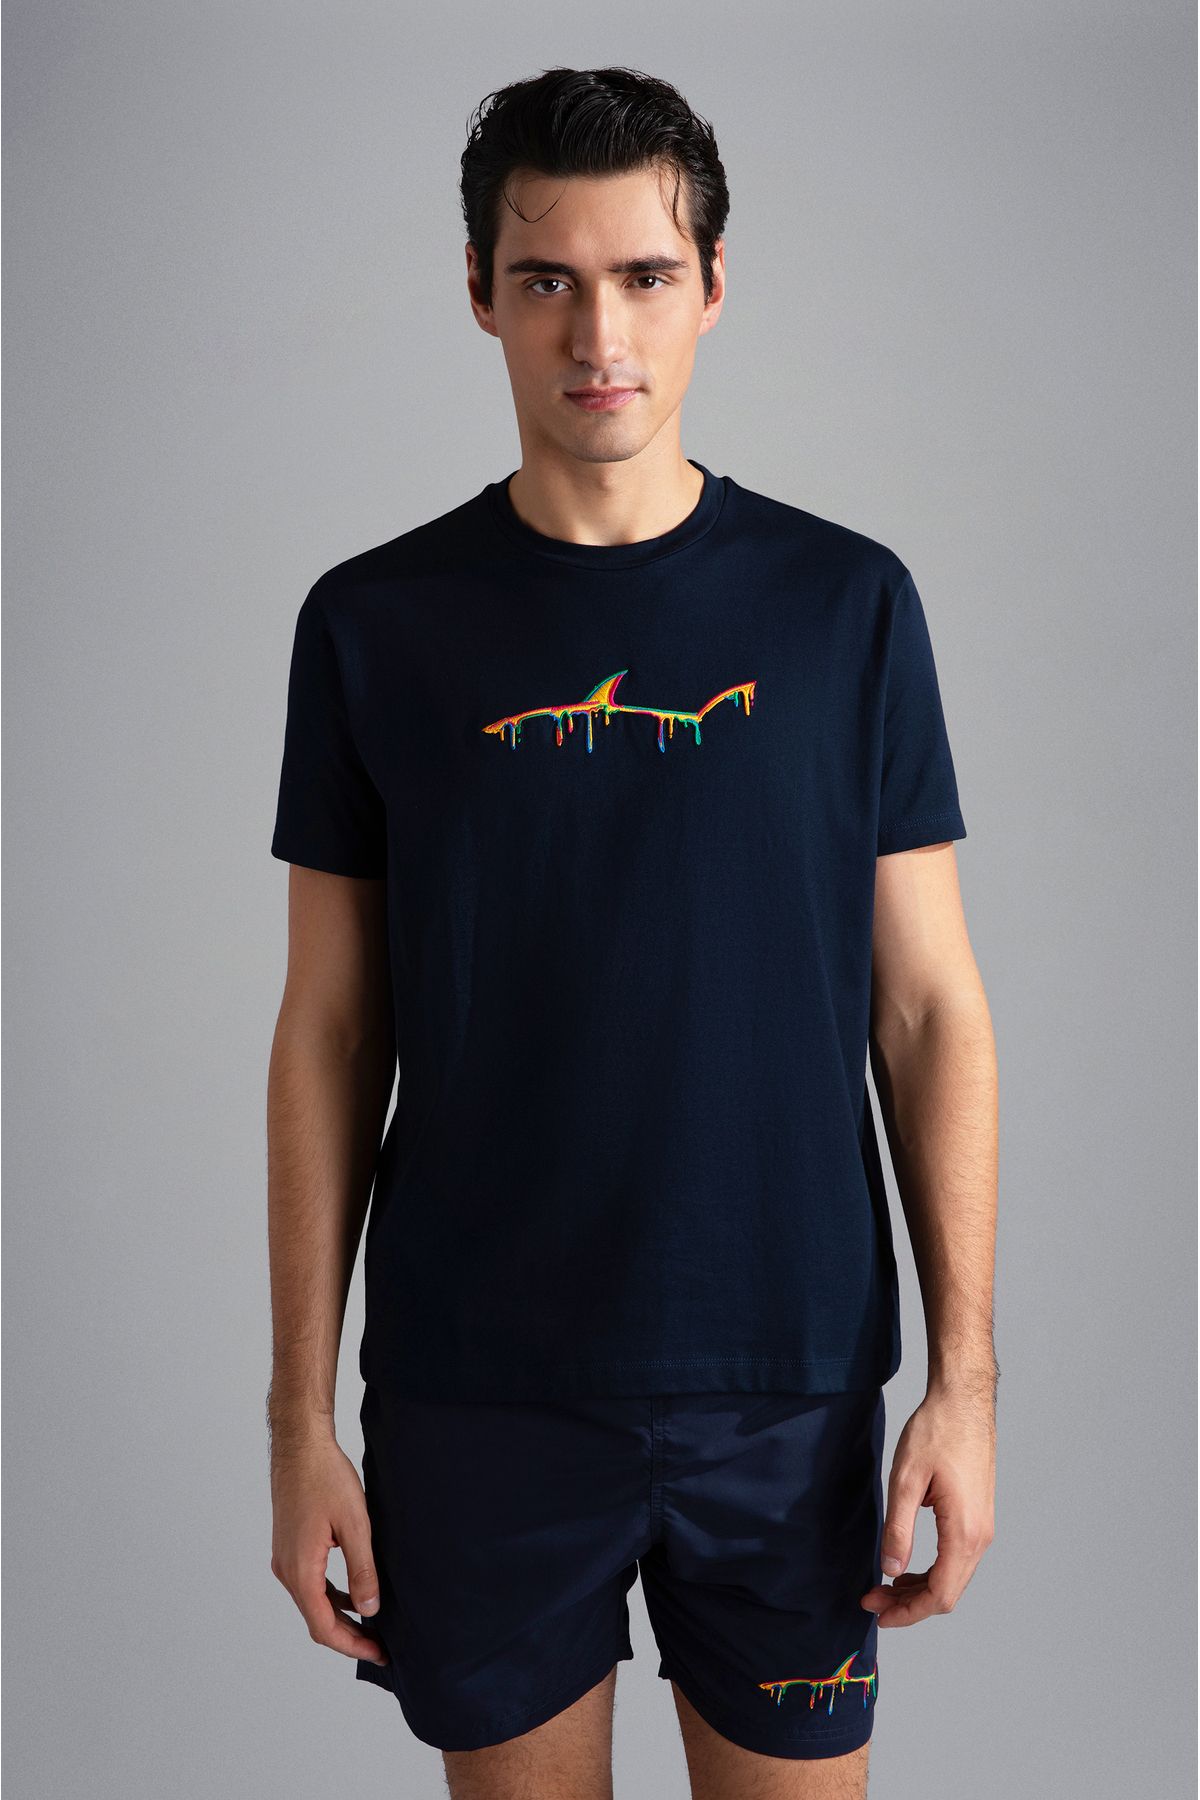 Paul&Shark Erkek Marka Logolu Pamuklu Normal Kalıp Günlük Lacivert T-Shirt 24411052-013